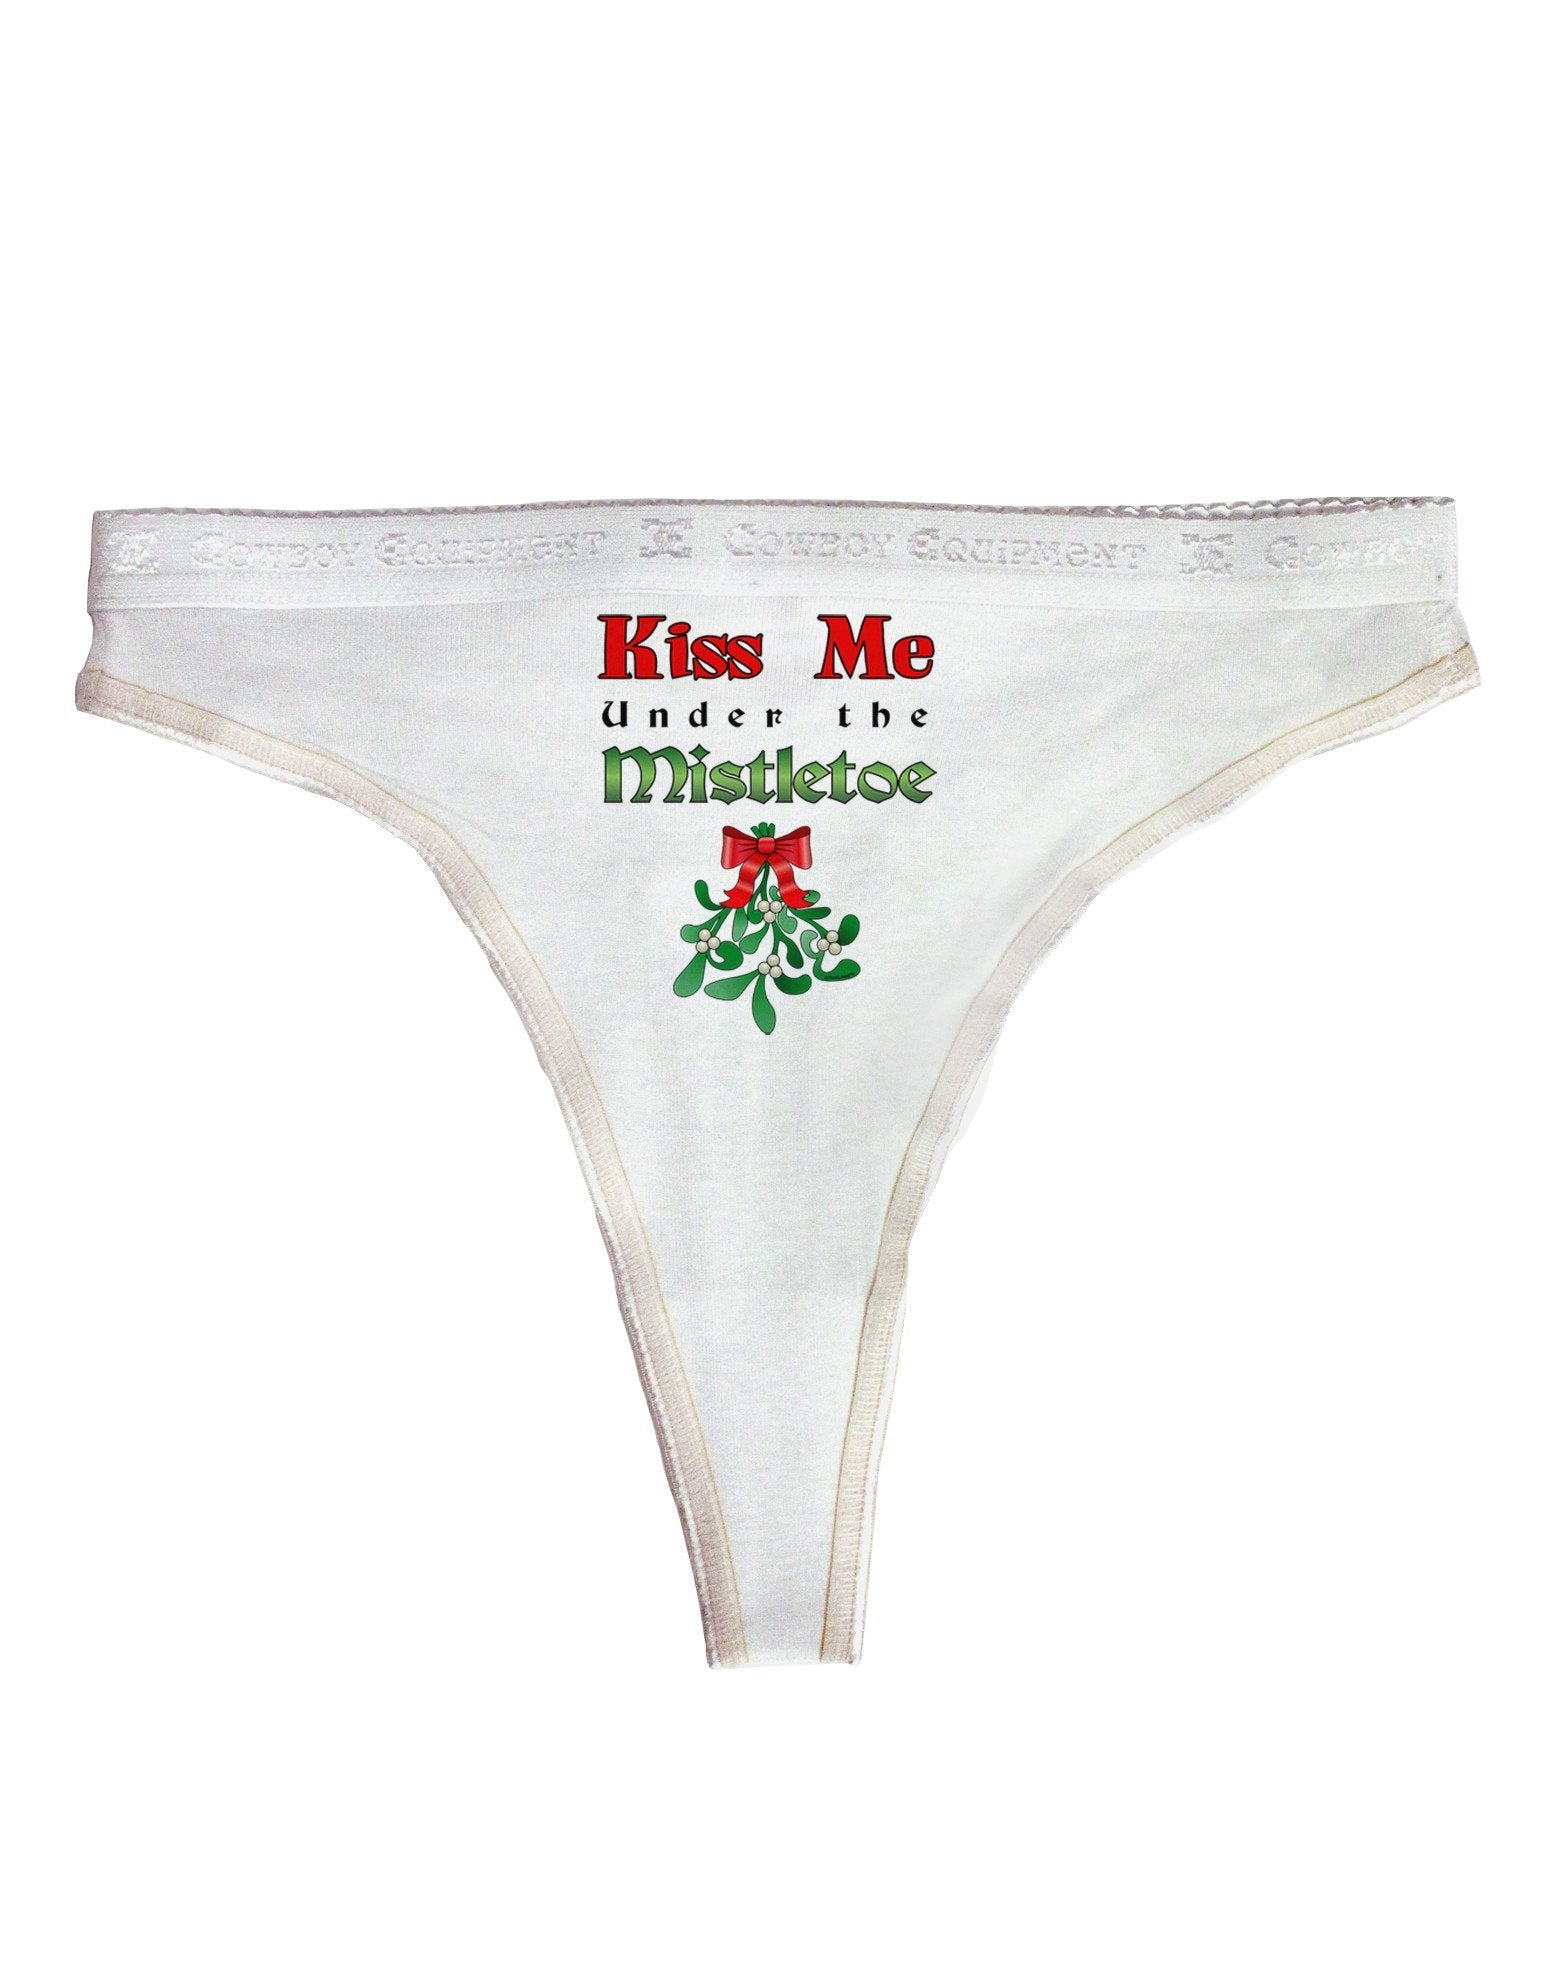 Shop Kiss Me Under the Mistletoe Thong Underwear - XS to L Sizes - ABC  Underwear